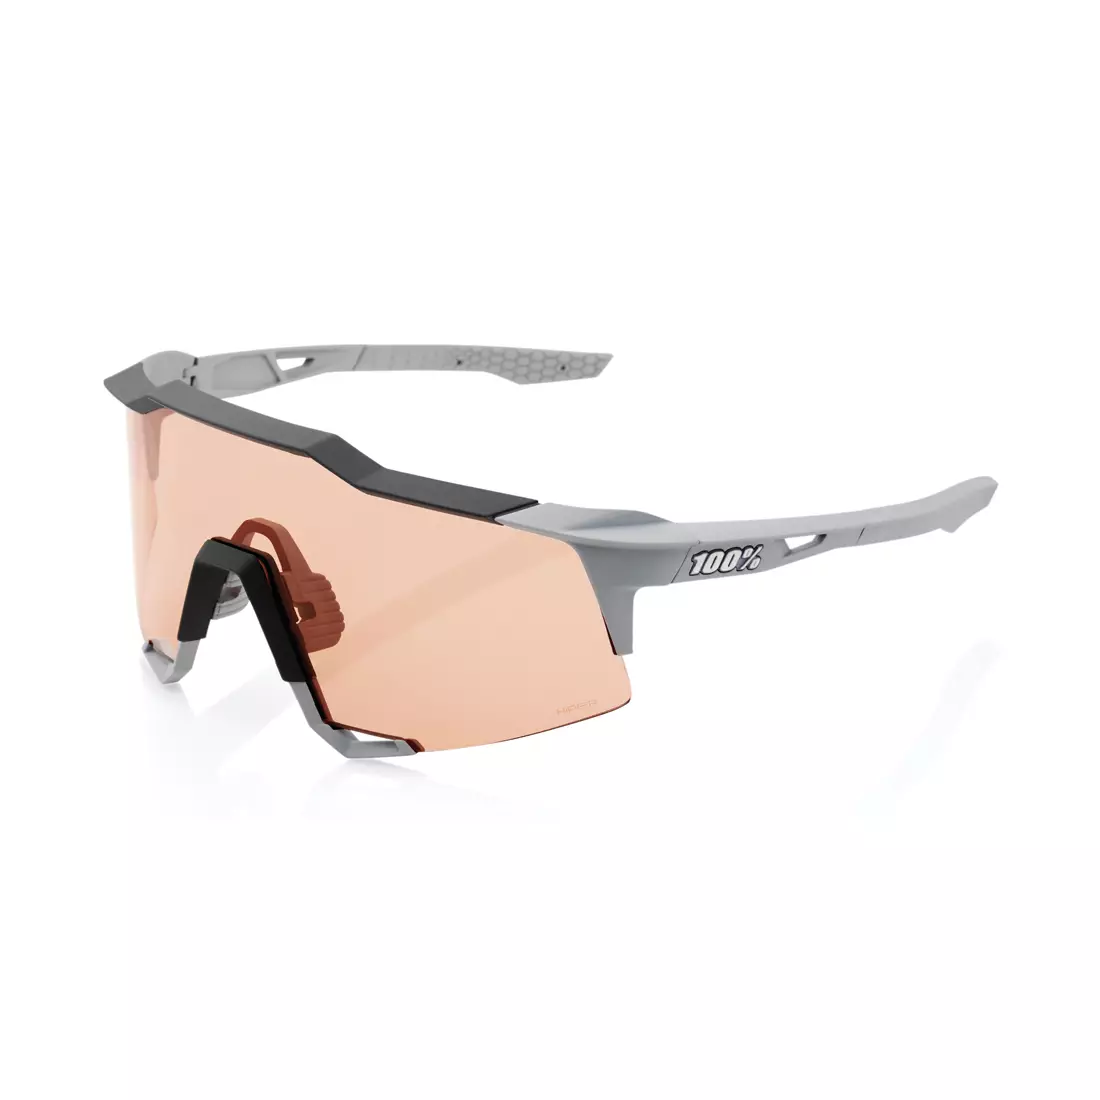 100% ochelari sportivi SPEEDCRAFT (HiPER Coral Lens) Soft Tact Stone Grey STO-61001-424-01